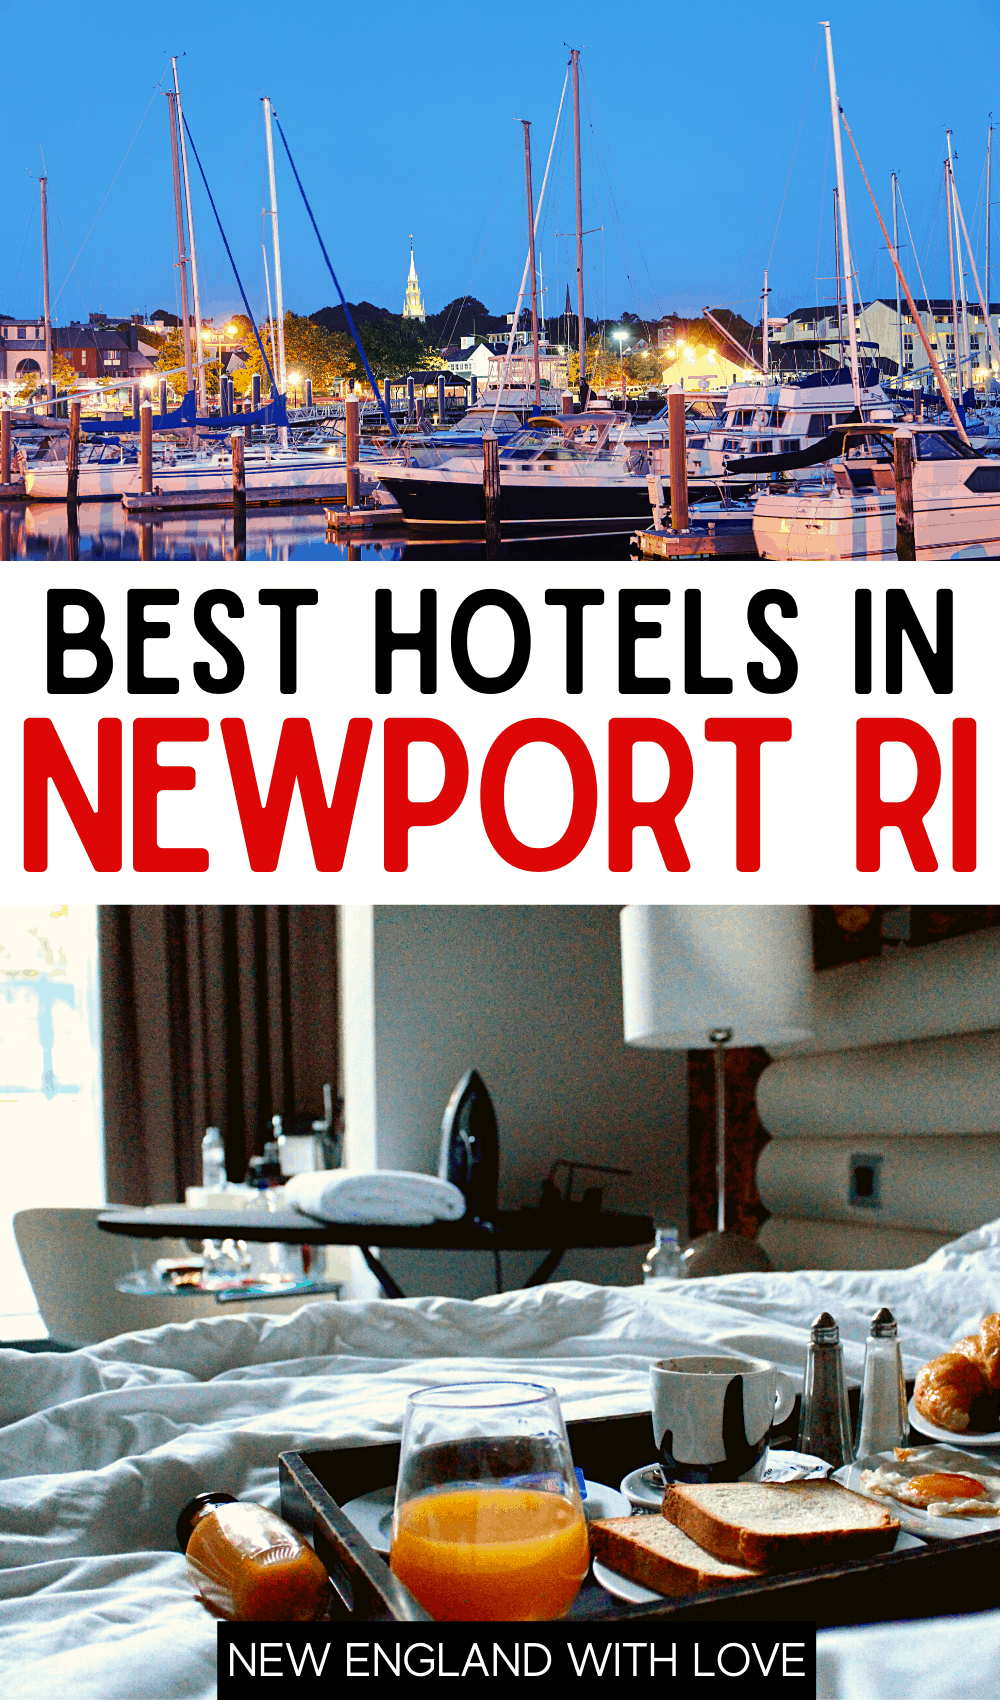 Pinterest graphic reading "BEST HOTELS IN NEWPORT RI"